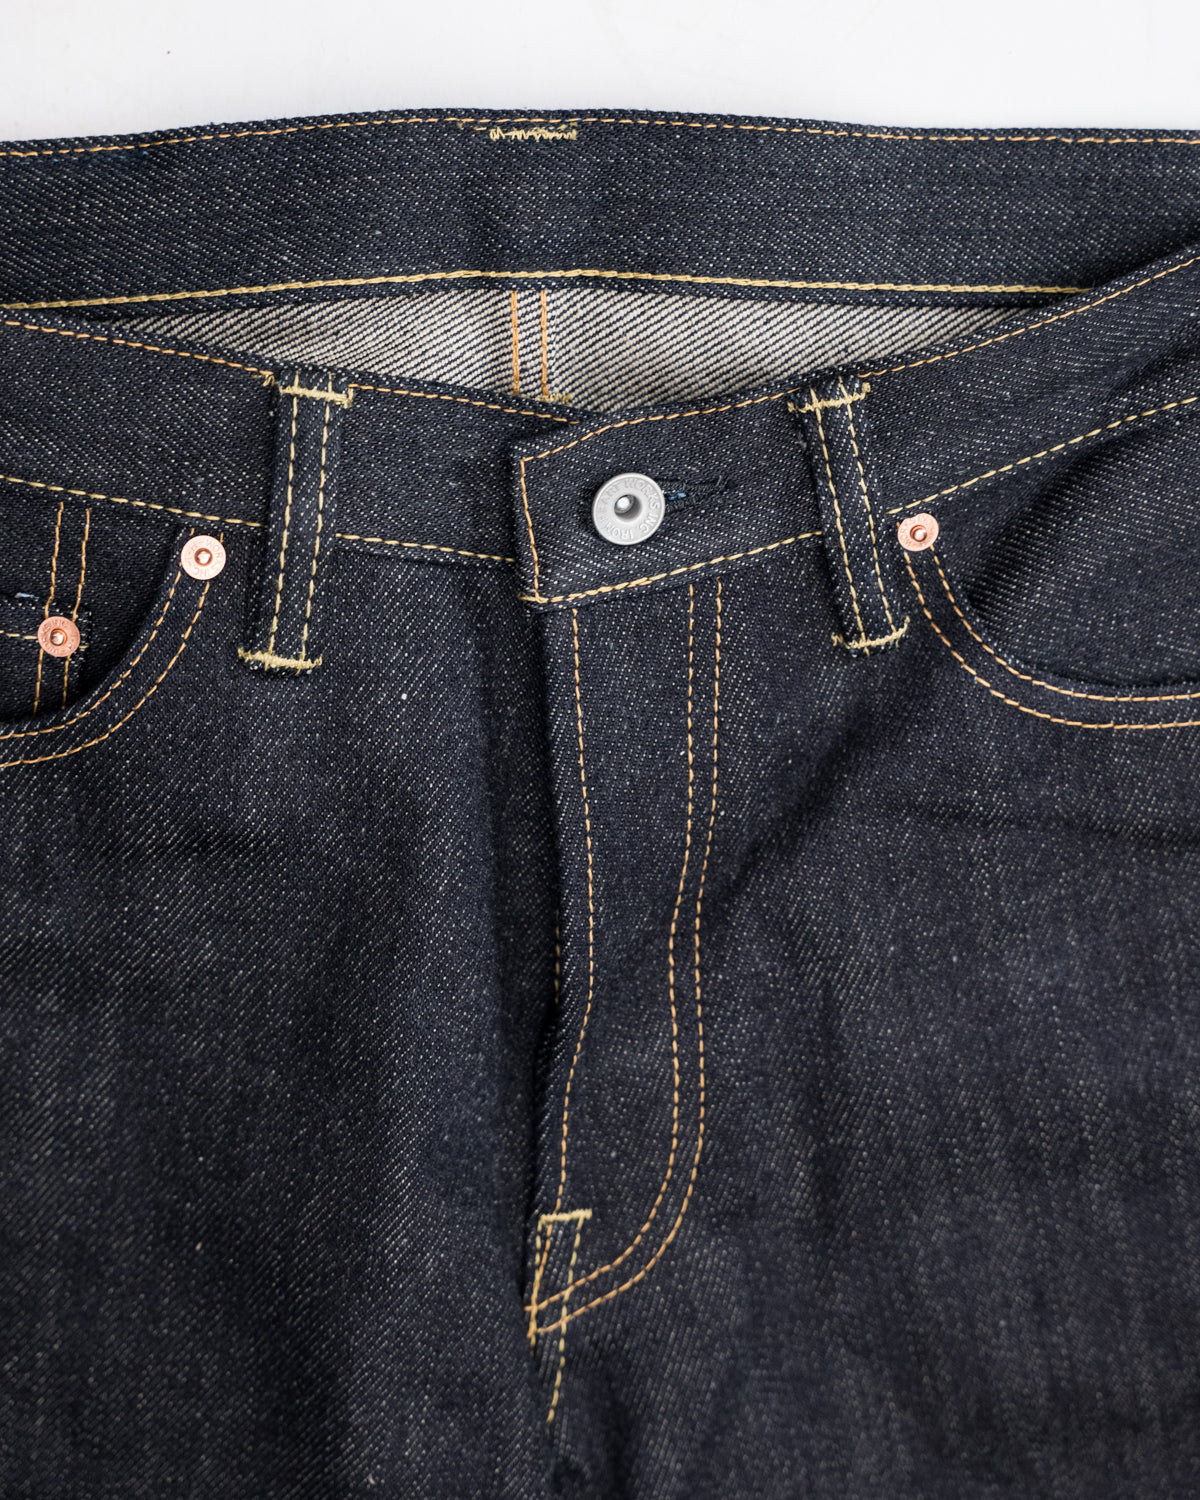 IH-634-XHS - 25oz Selvedge Denim Straight Cut Jeans - Indigo